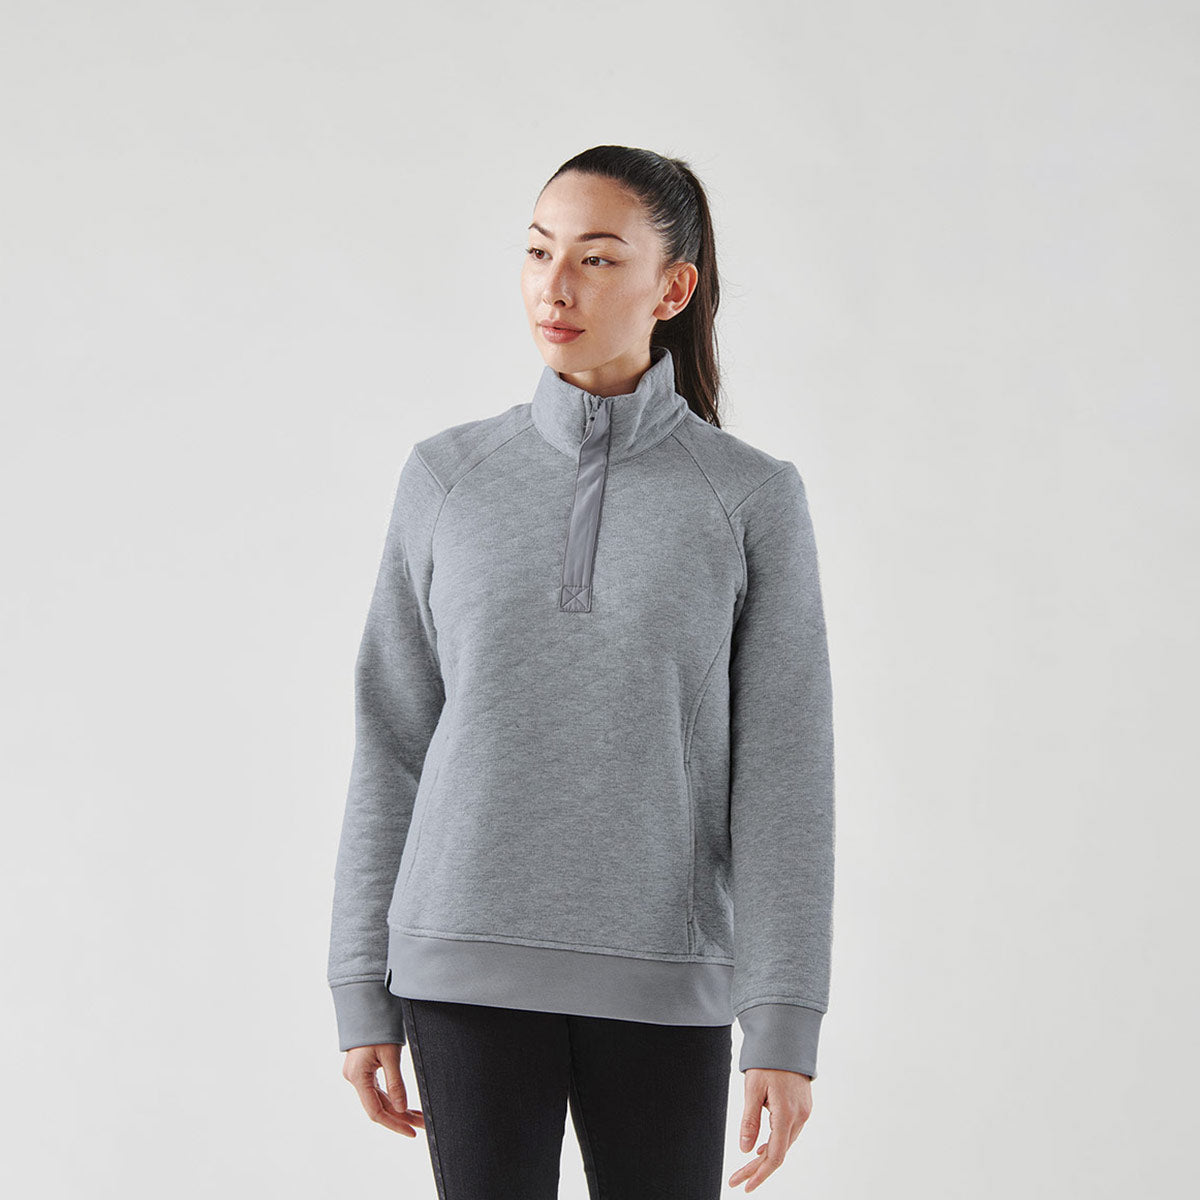 Women's Avalante 1/4 Zip Pullover - Stormtech USA Retail